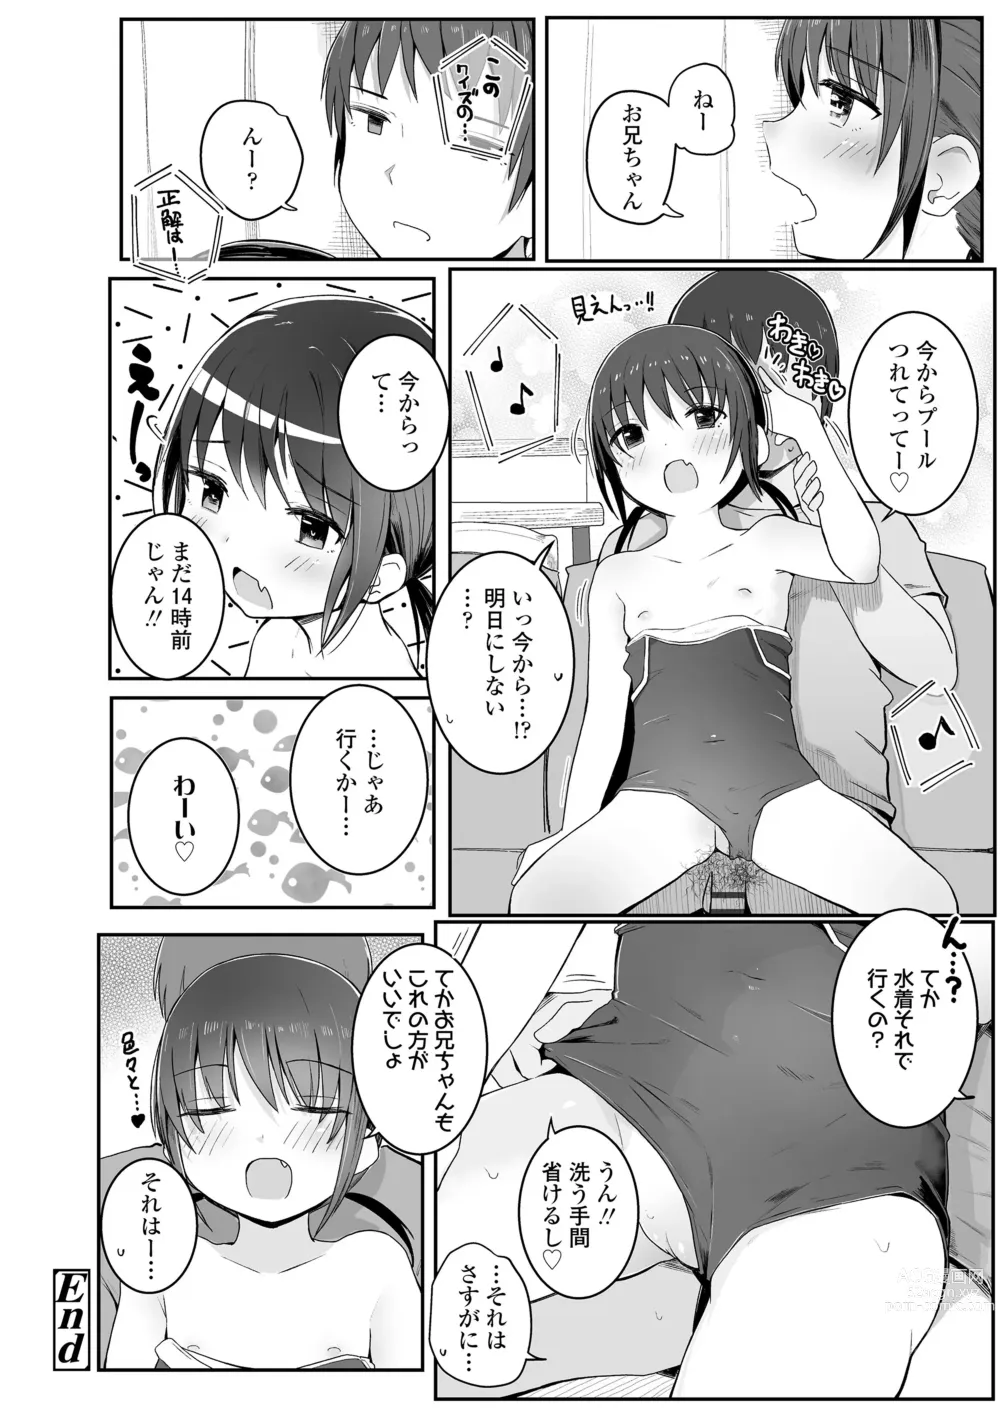 Page 178 of manga Chiisai Houga H Desho